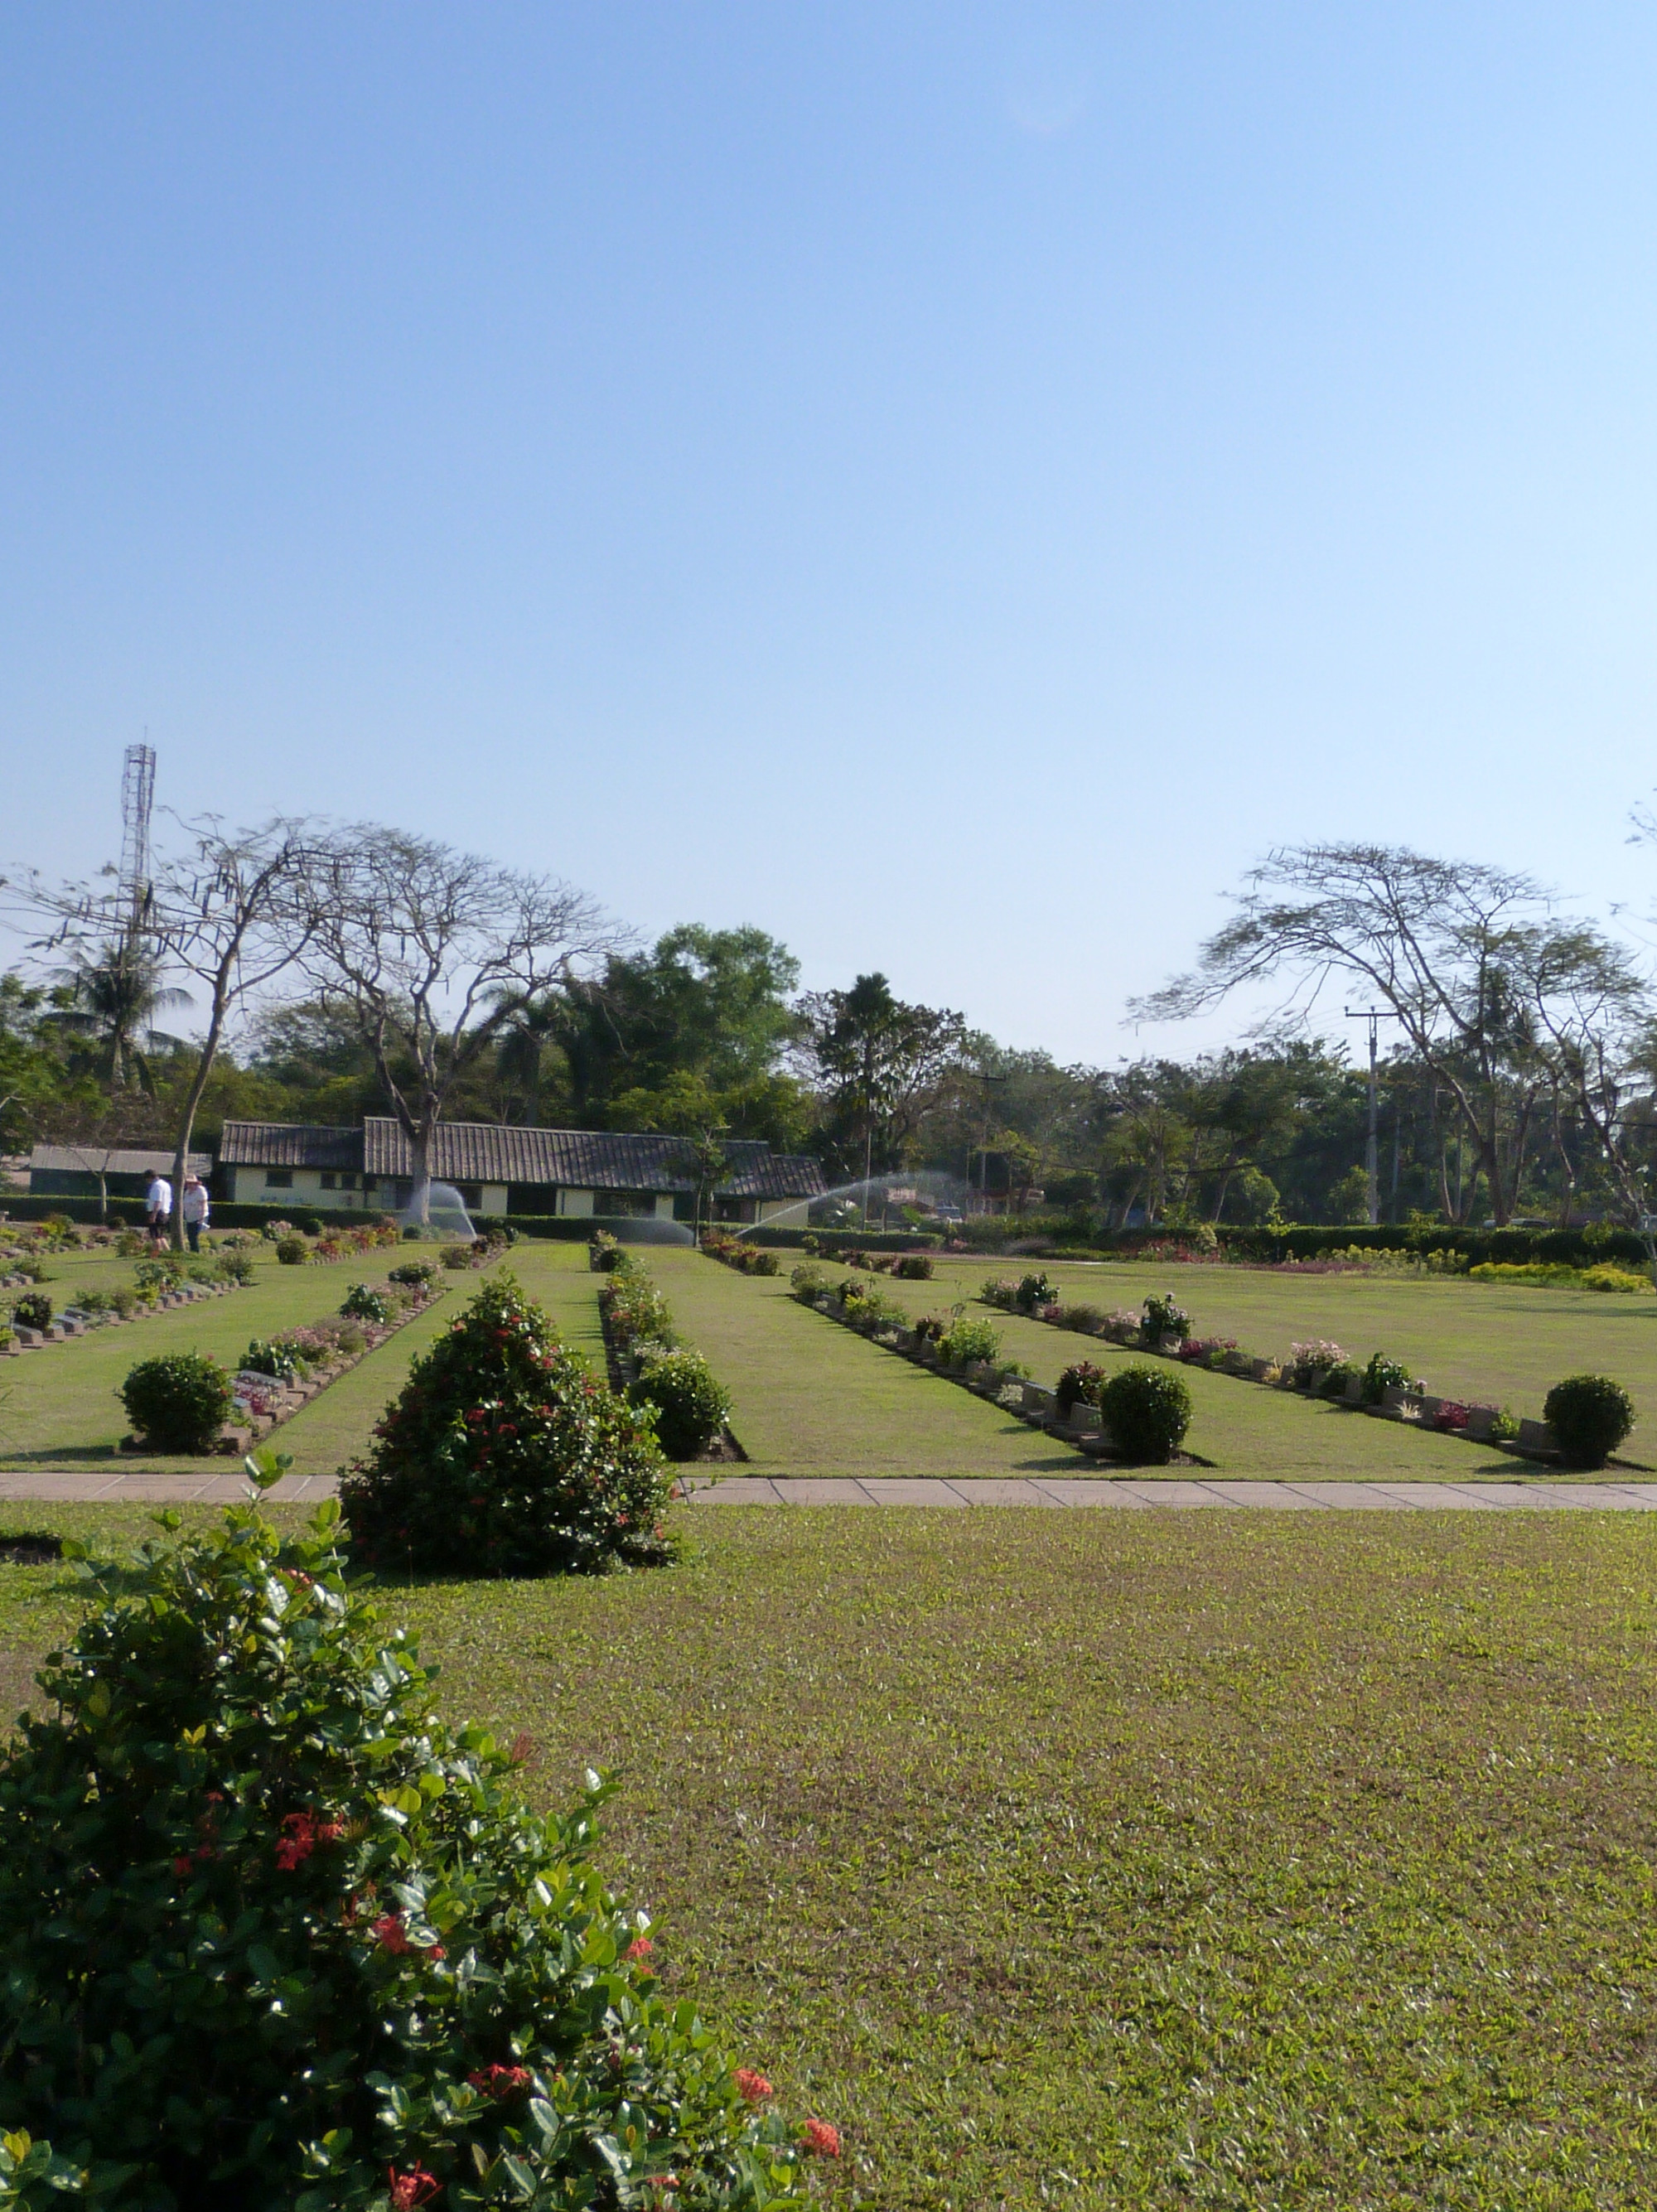 Htauk Kyant War Cemetery, Мьянма (Бирма)